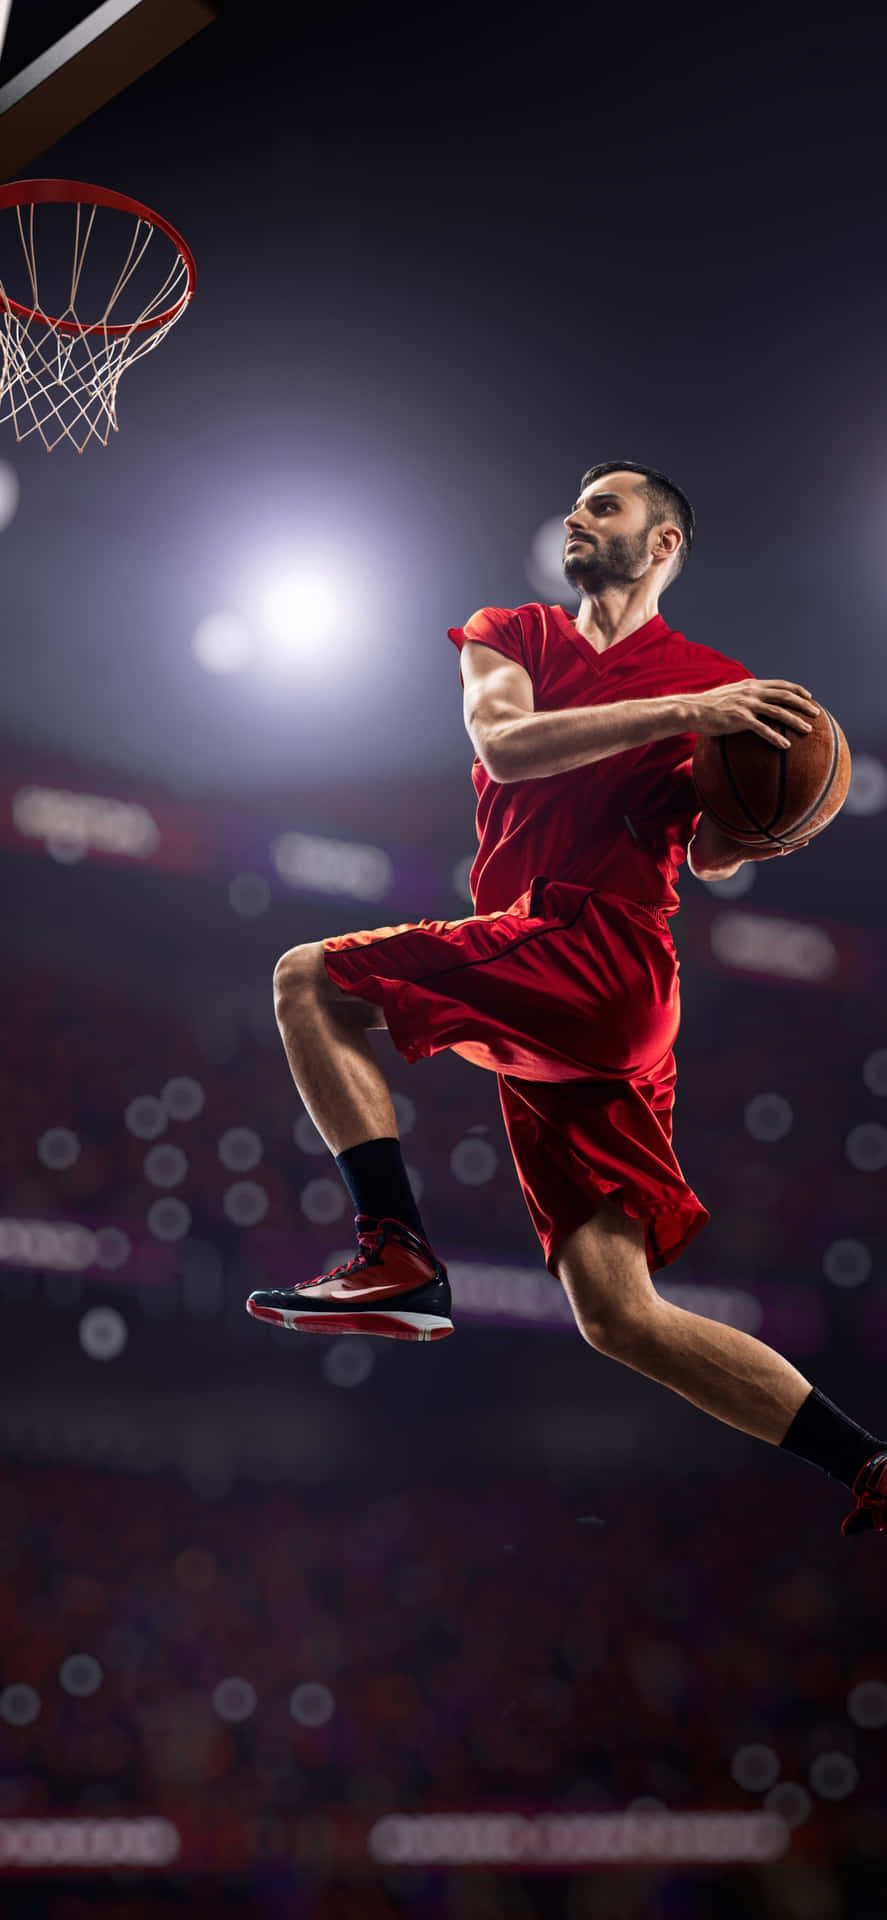 Iphone Xs Basketball Jump Background